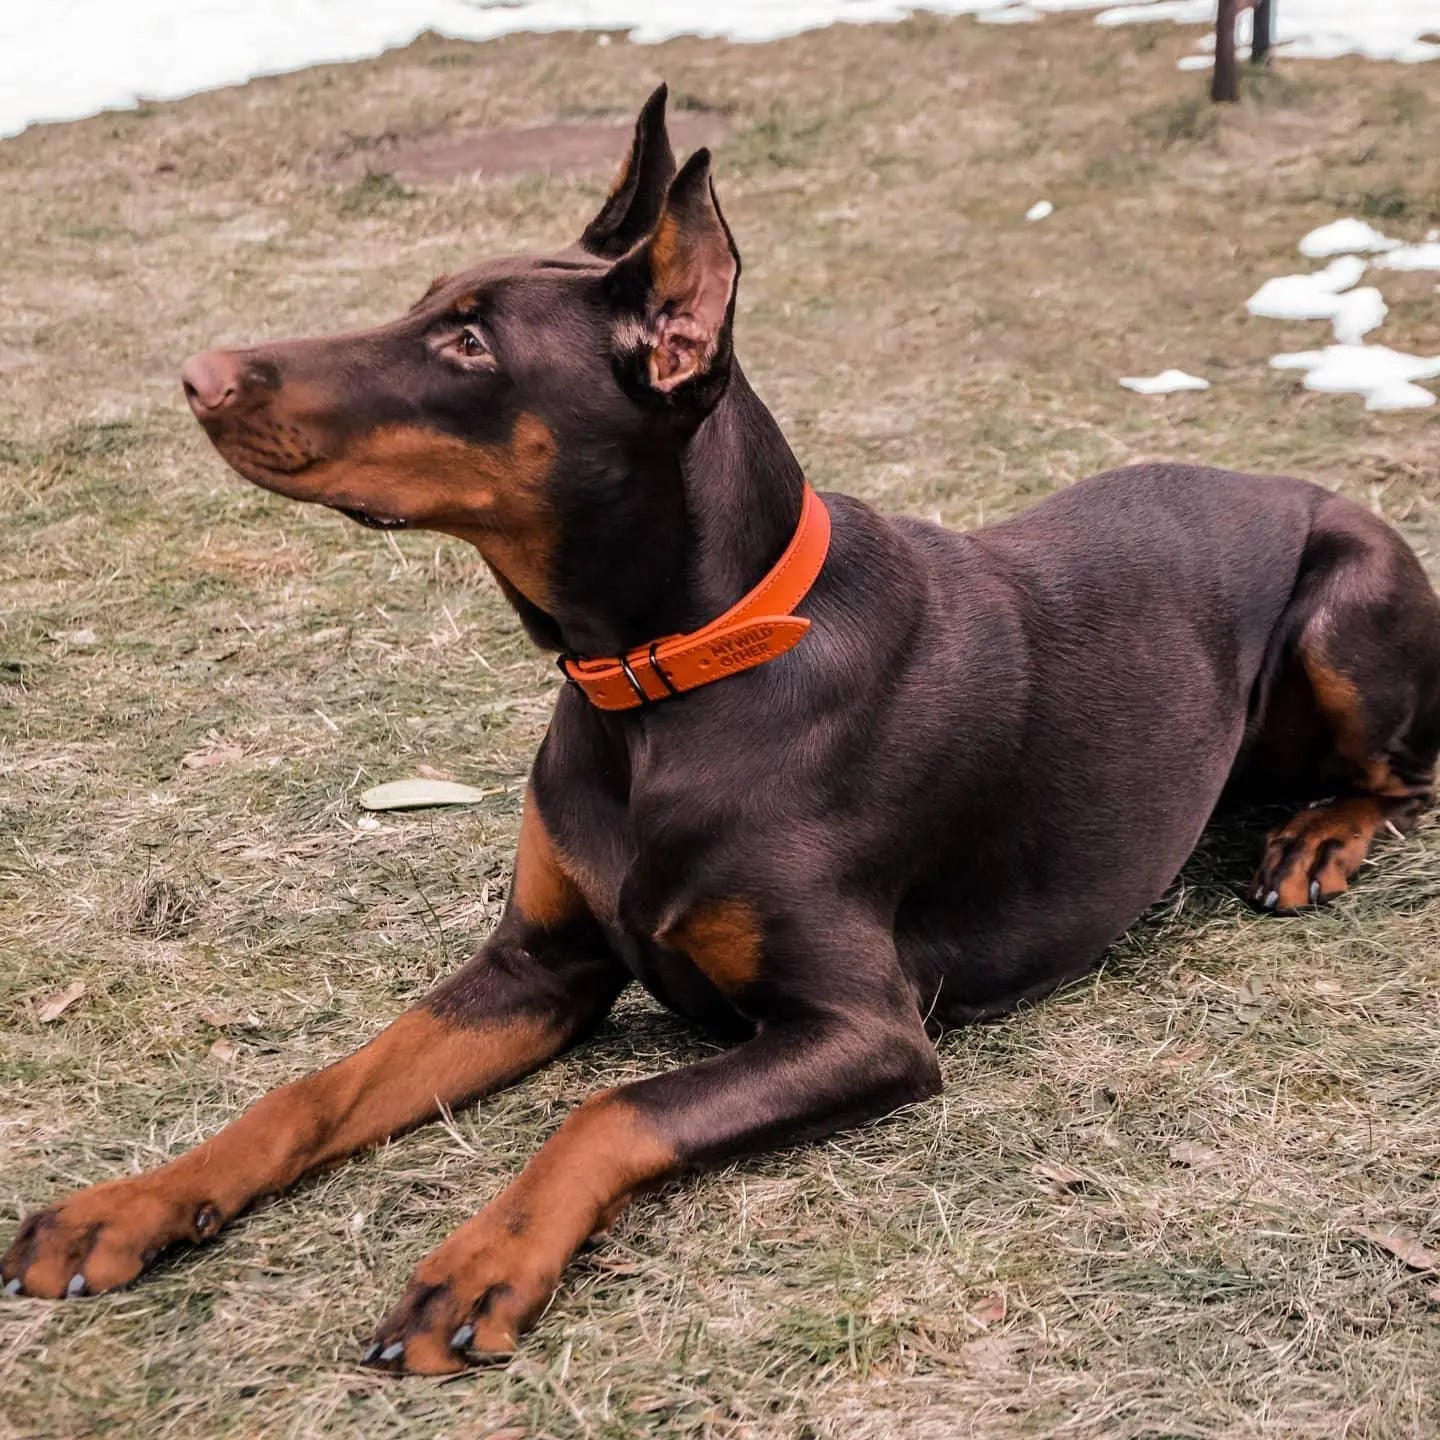 Handmade red leather dog collar - premium dog goods handmade in Europe by animalistus